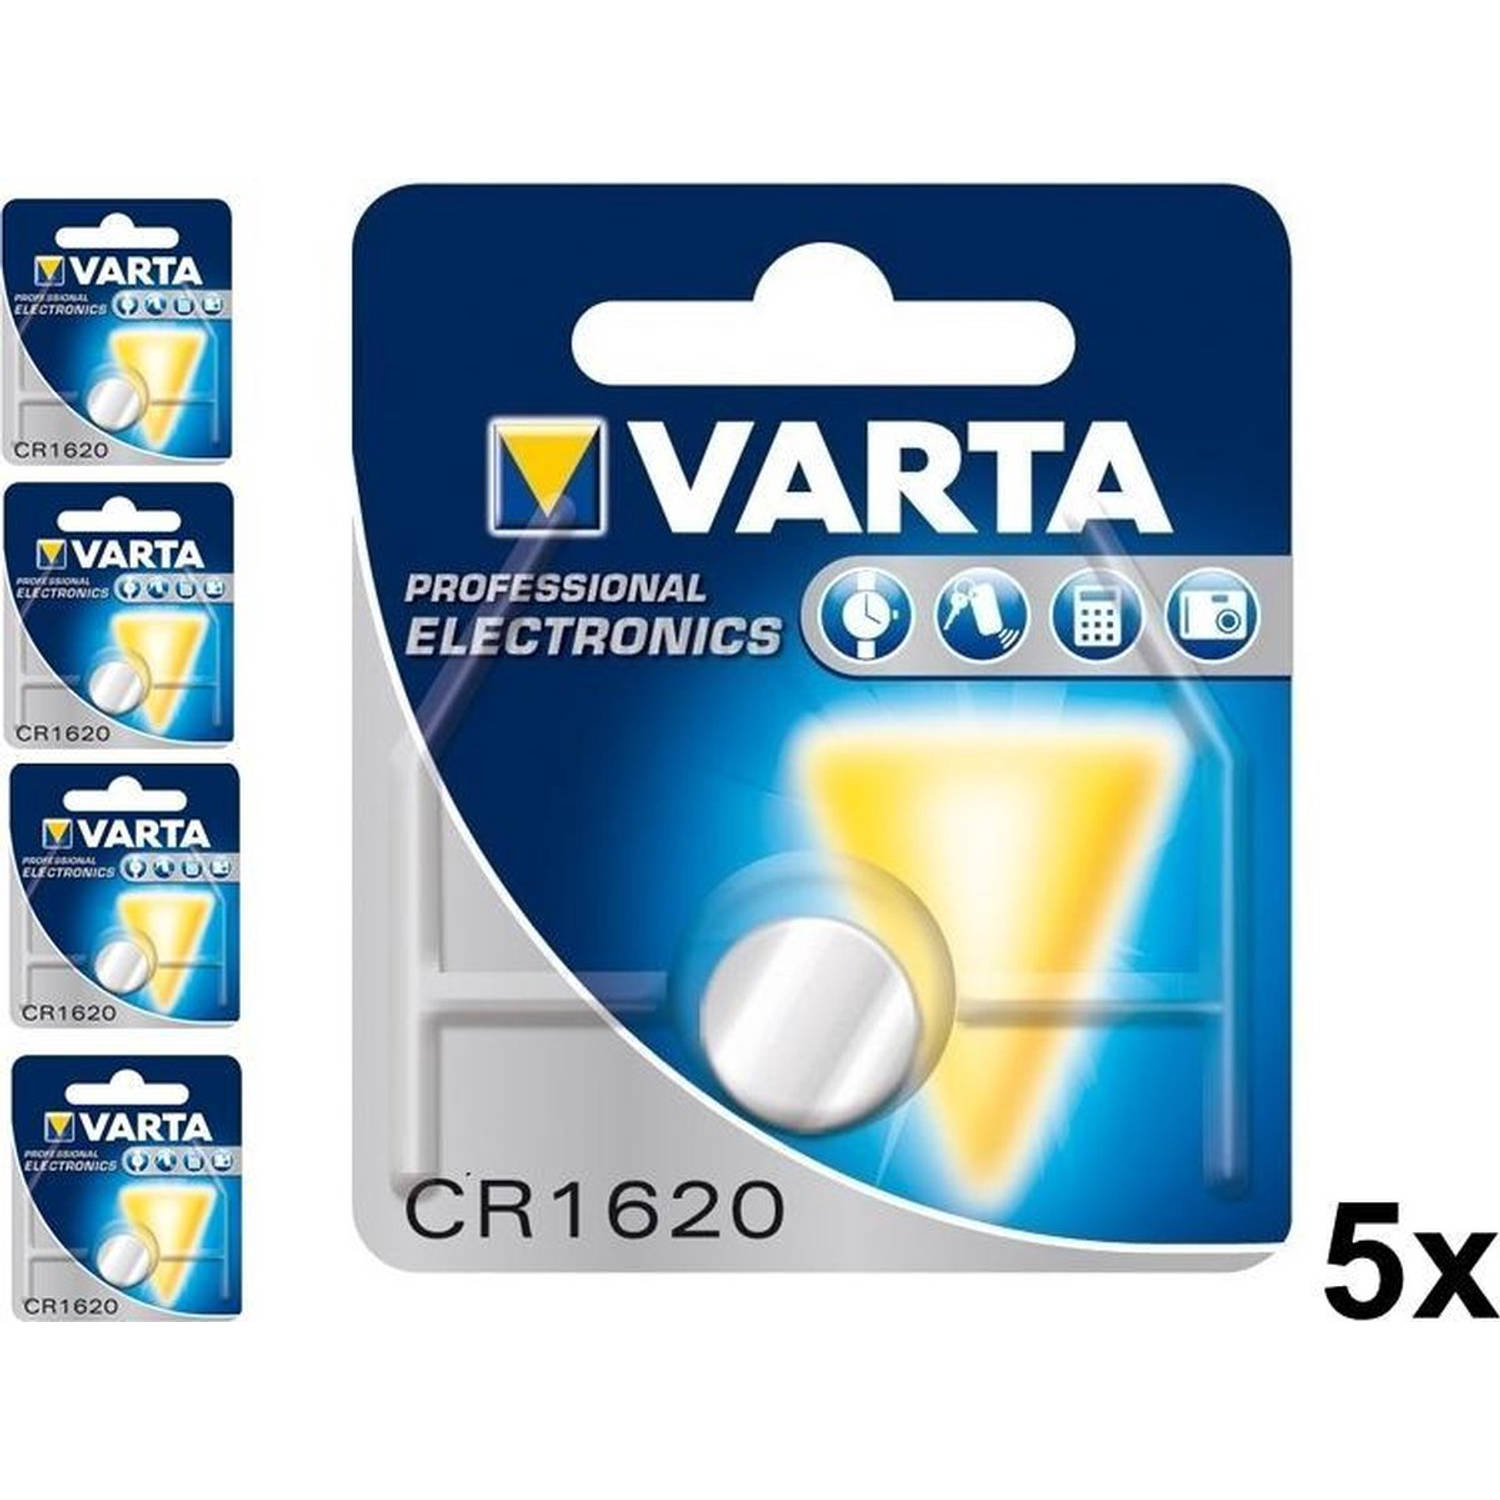 5 Stuks - Varta Professional Electronics CR1620 6620 70mAh 3V knoopcelbatterij